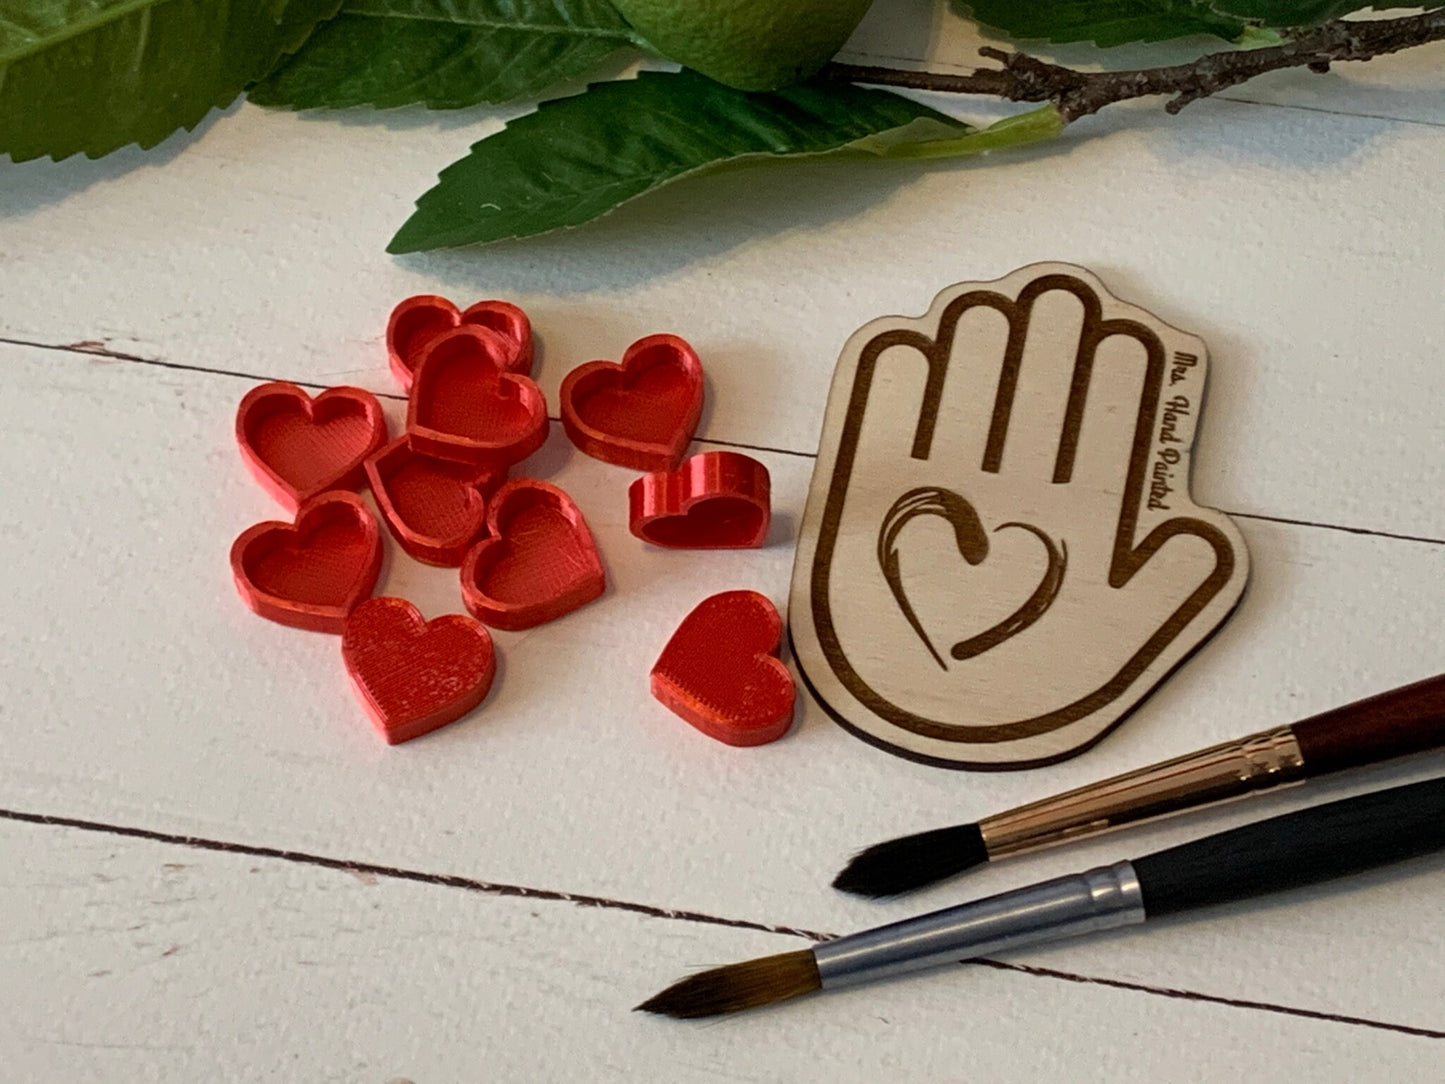 Custom PLA Bioplastic 3D Printed Watercolor Pans - Silk Shine Red or Pink Heart Shaped Quarter Pans - heart - Small or Bulk Quantities